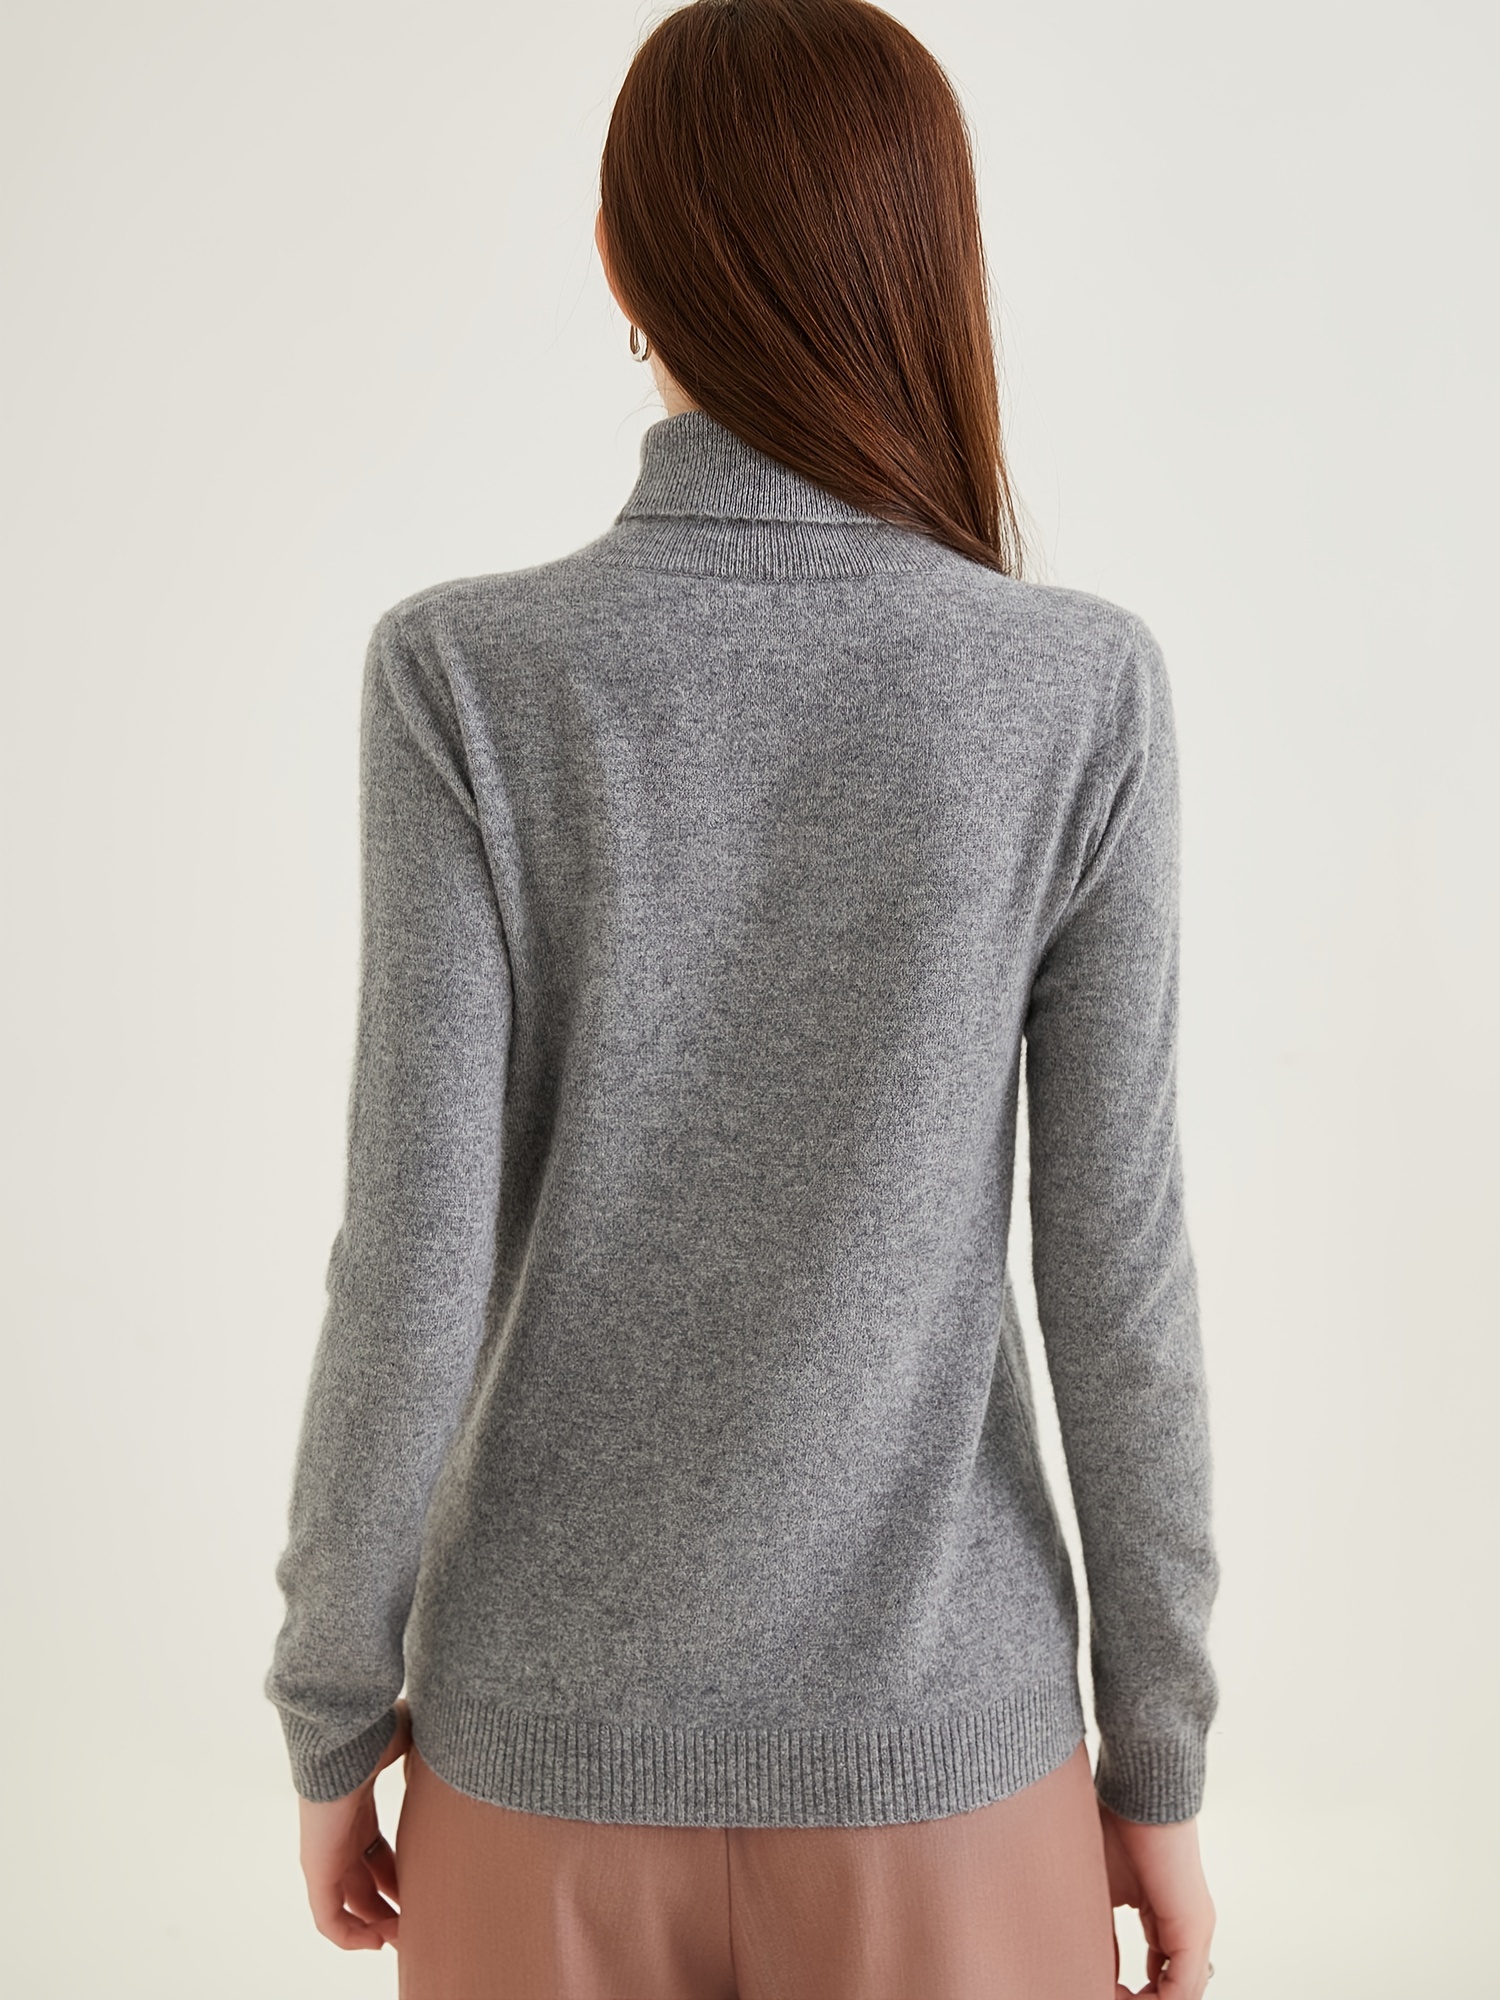 Cashmere Sweaters for Women, Shop Turtlenecks & Cardigans